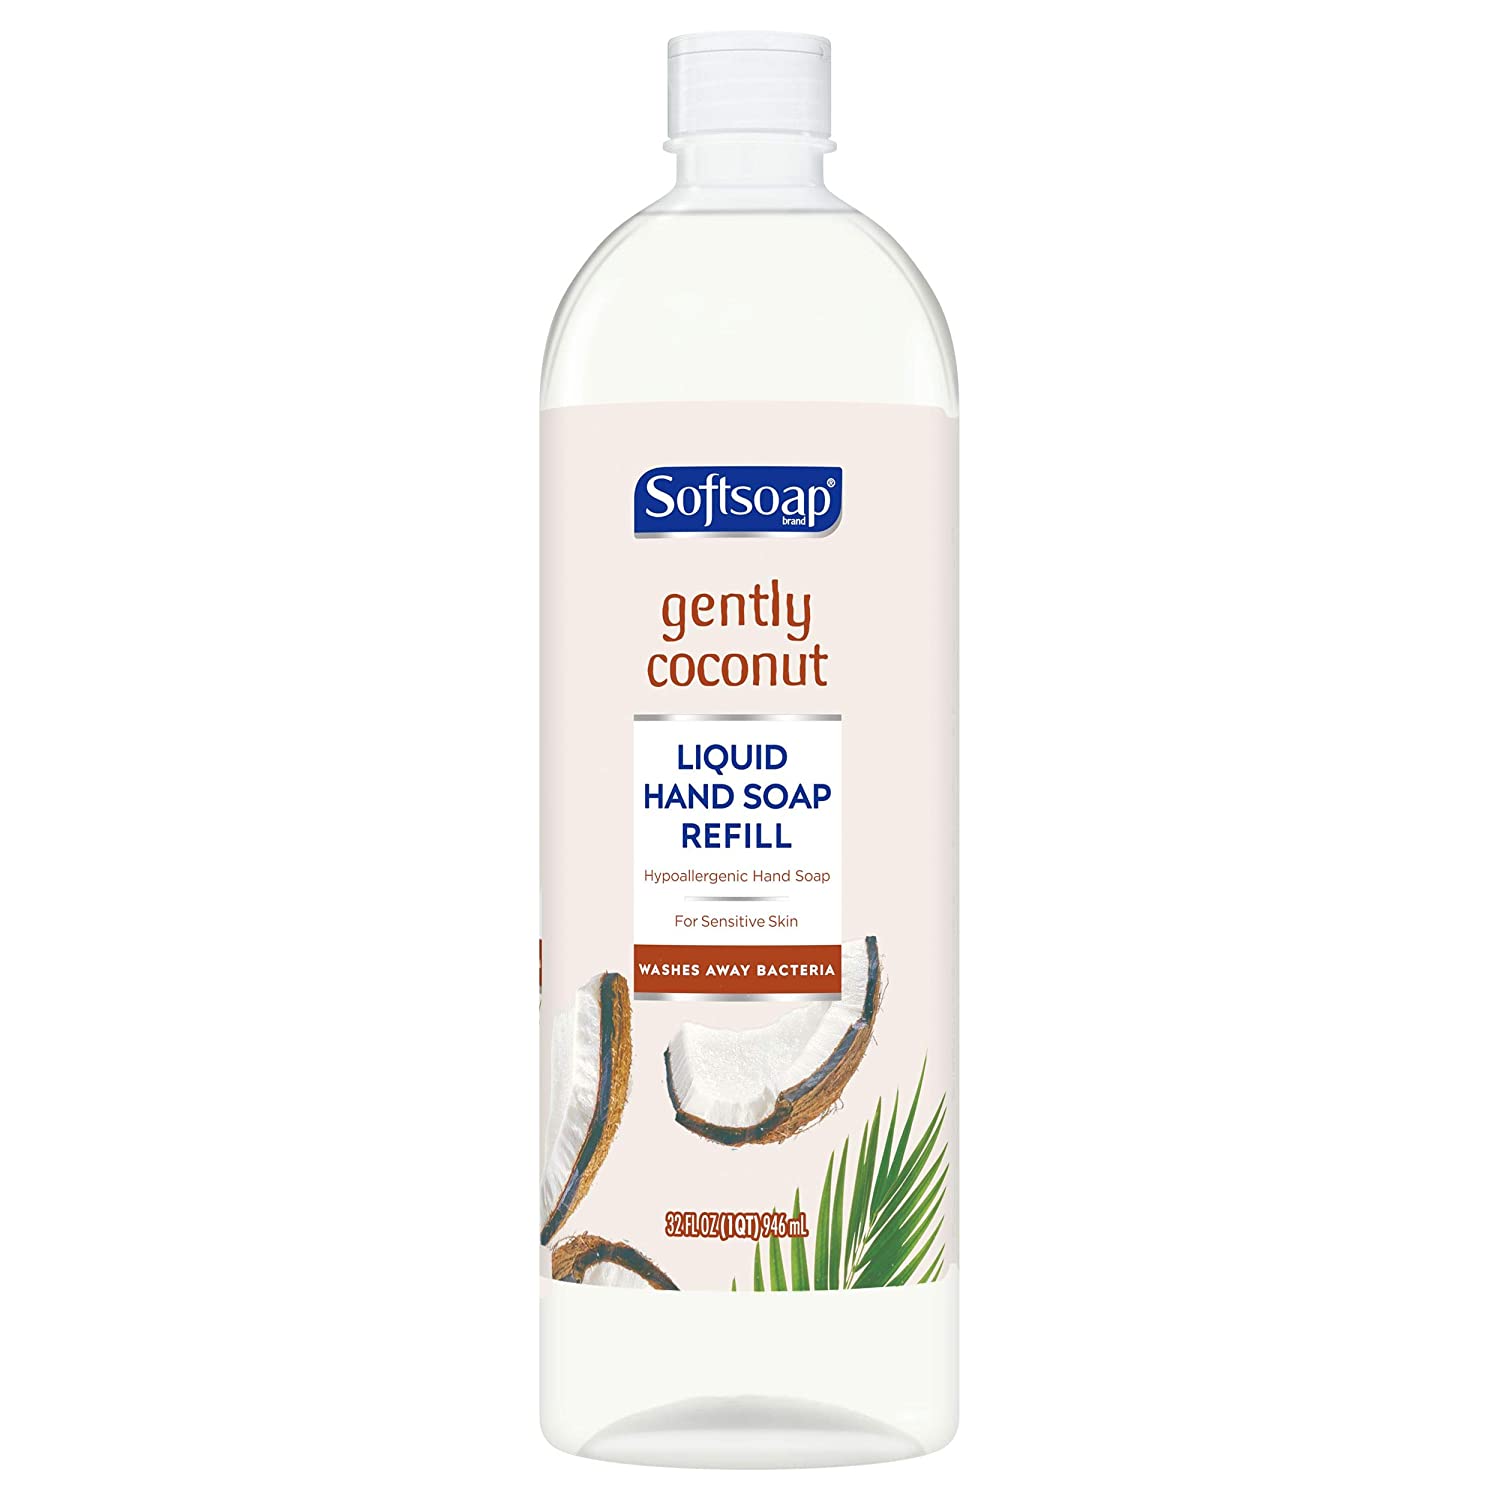 Softsoap Gently Coconut Liquid Hand Soap Refill 946ml